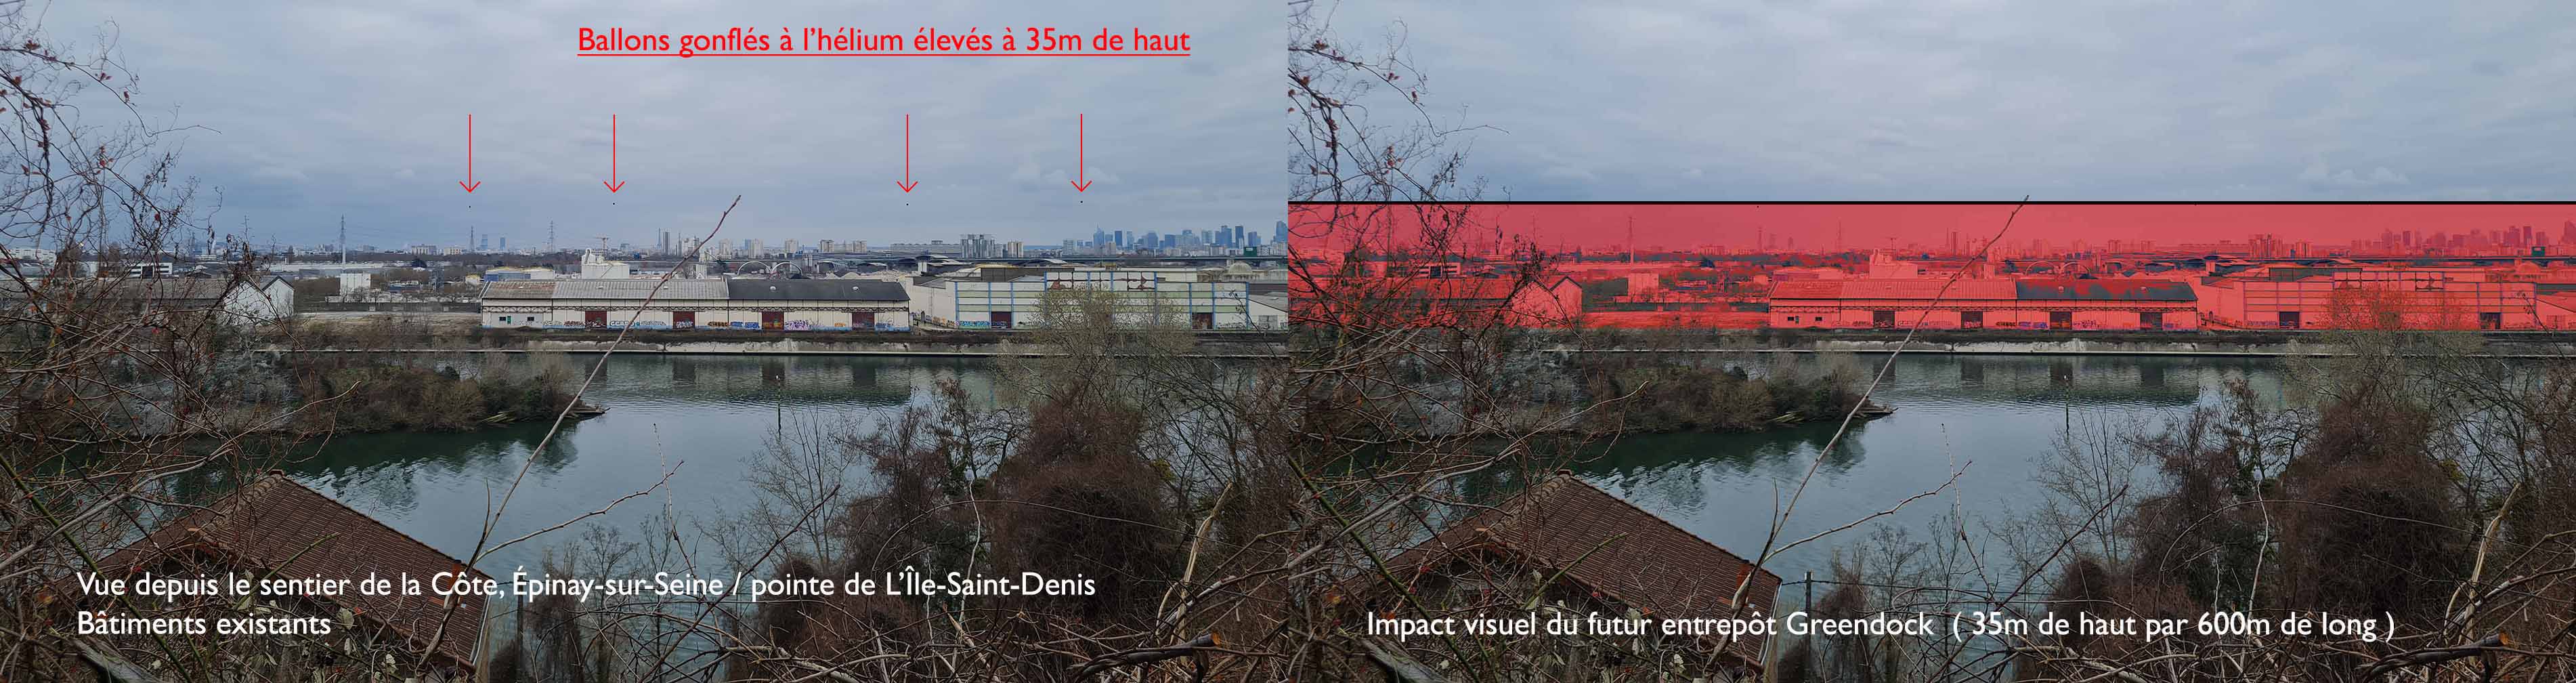 image Sentier_de_la_Cote_pointe_de_LIleSaintDenis.jpg (0.4MB)